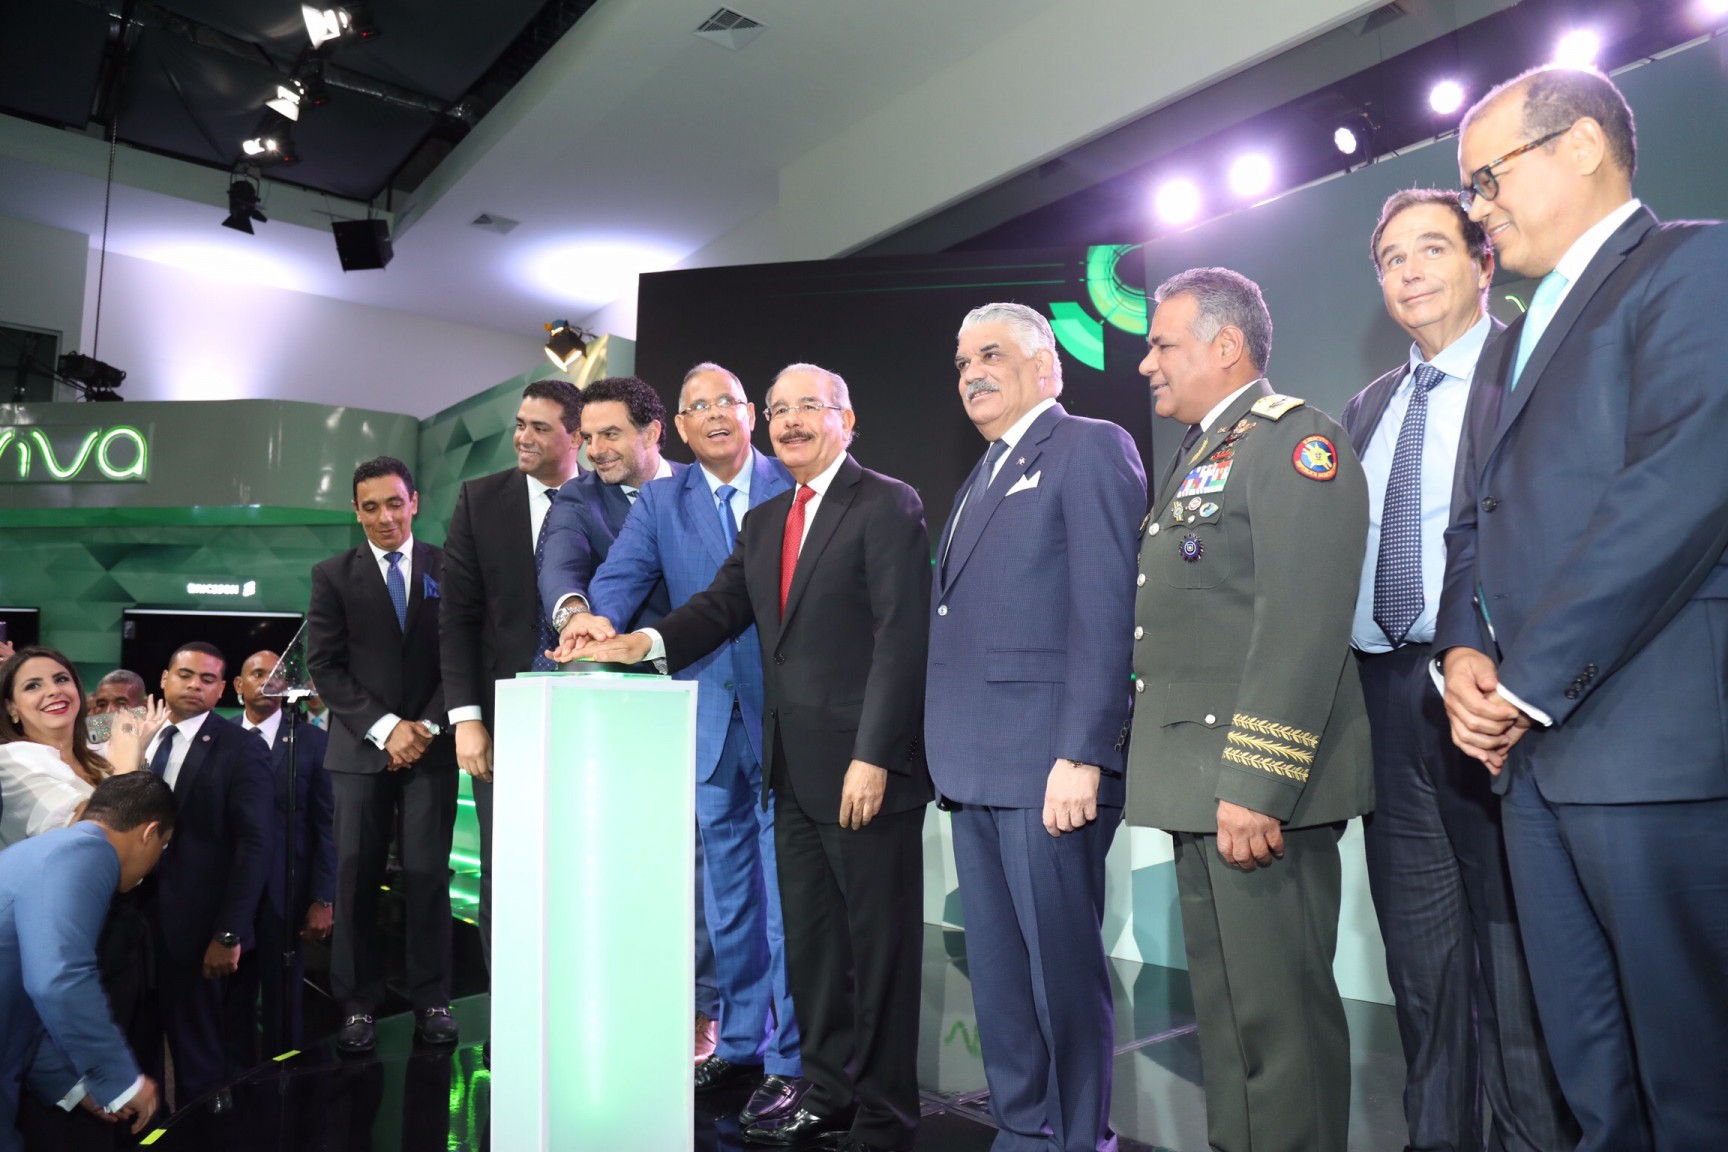 REPÚBLICA DOMINICANA: Presidente Danilo Medina asiste a primera demostración de tecnología 5G en RD, realizada por empresa Viva